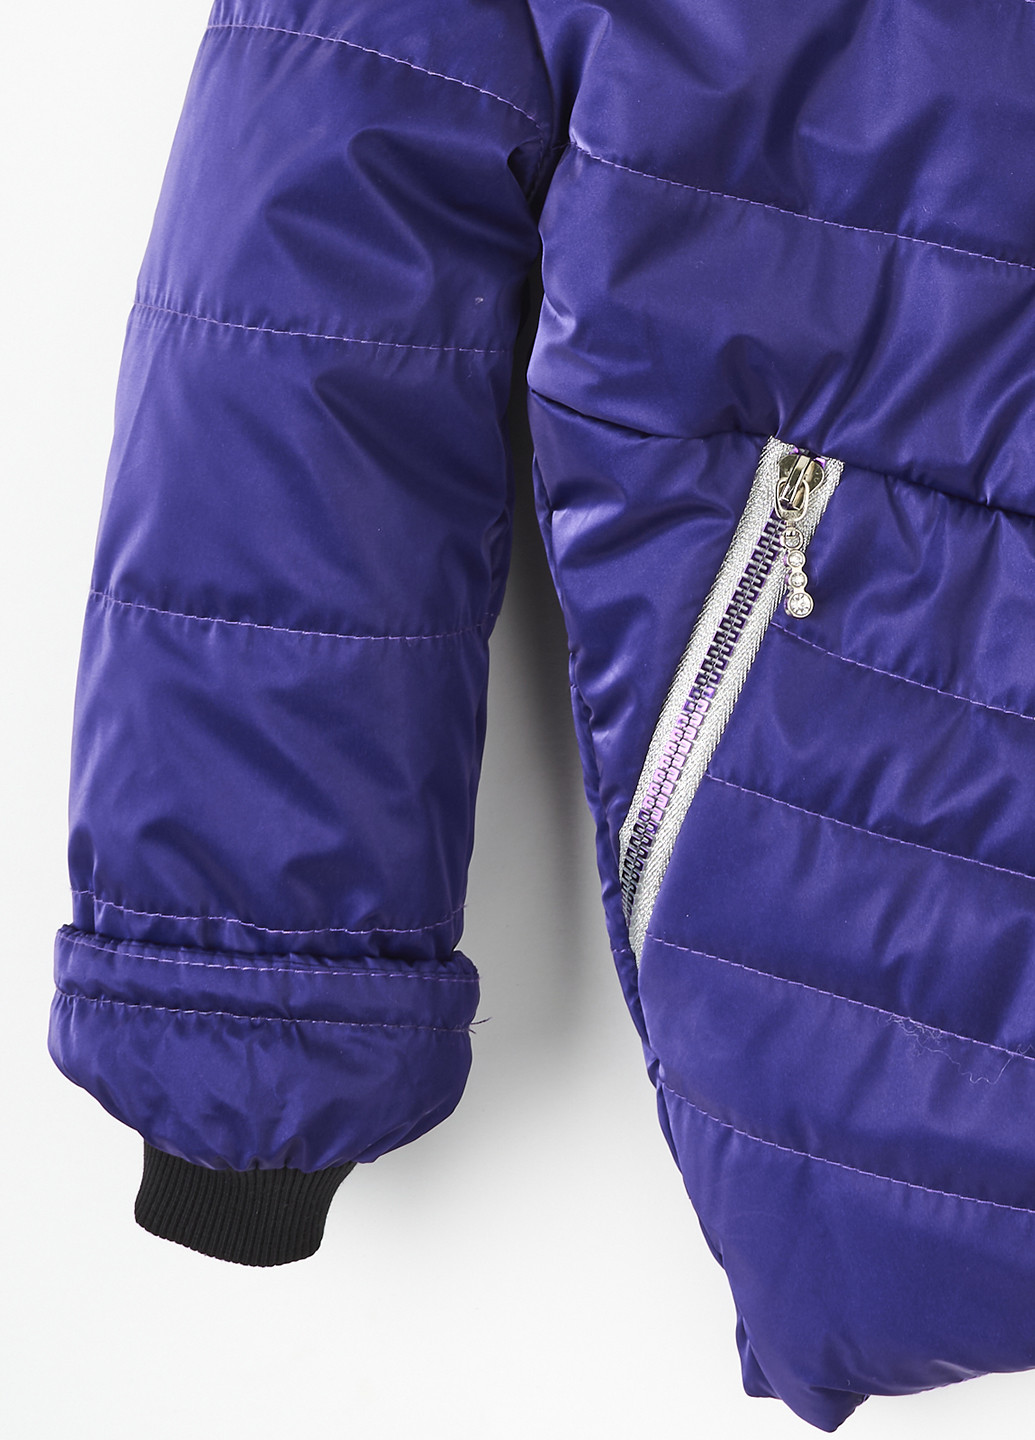 Темно-фиолетовая зимняя куртка Одягайко